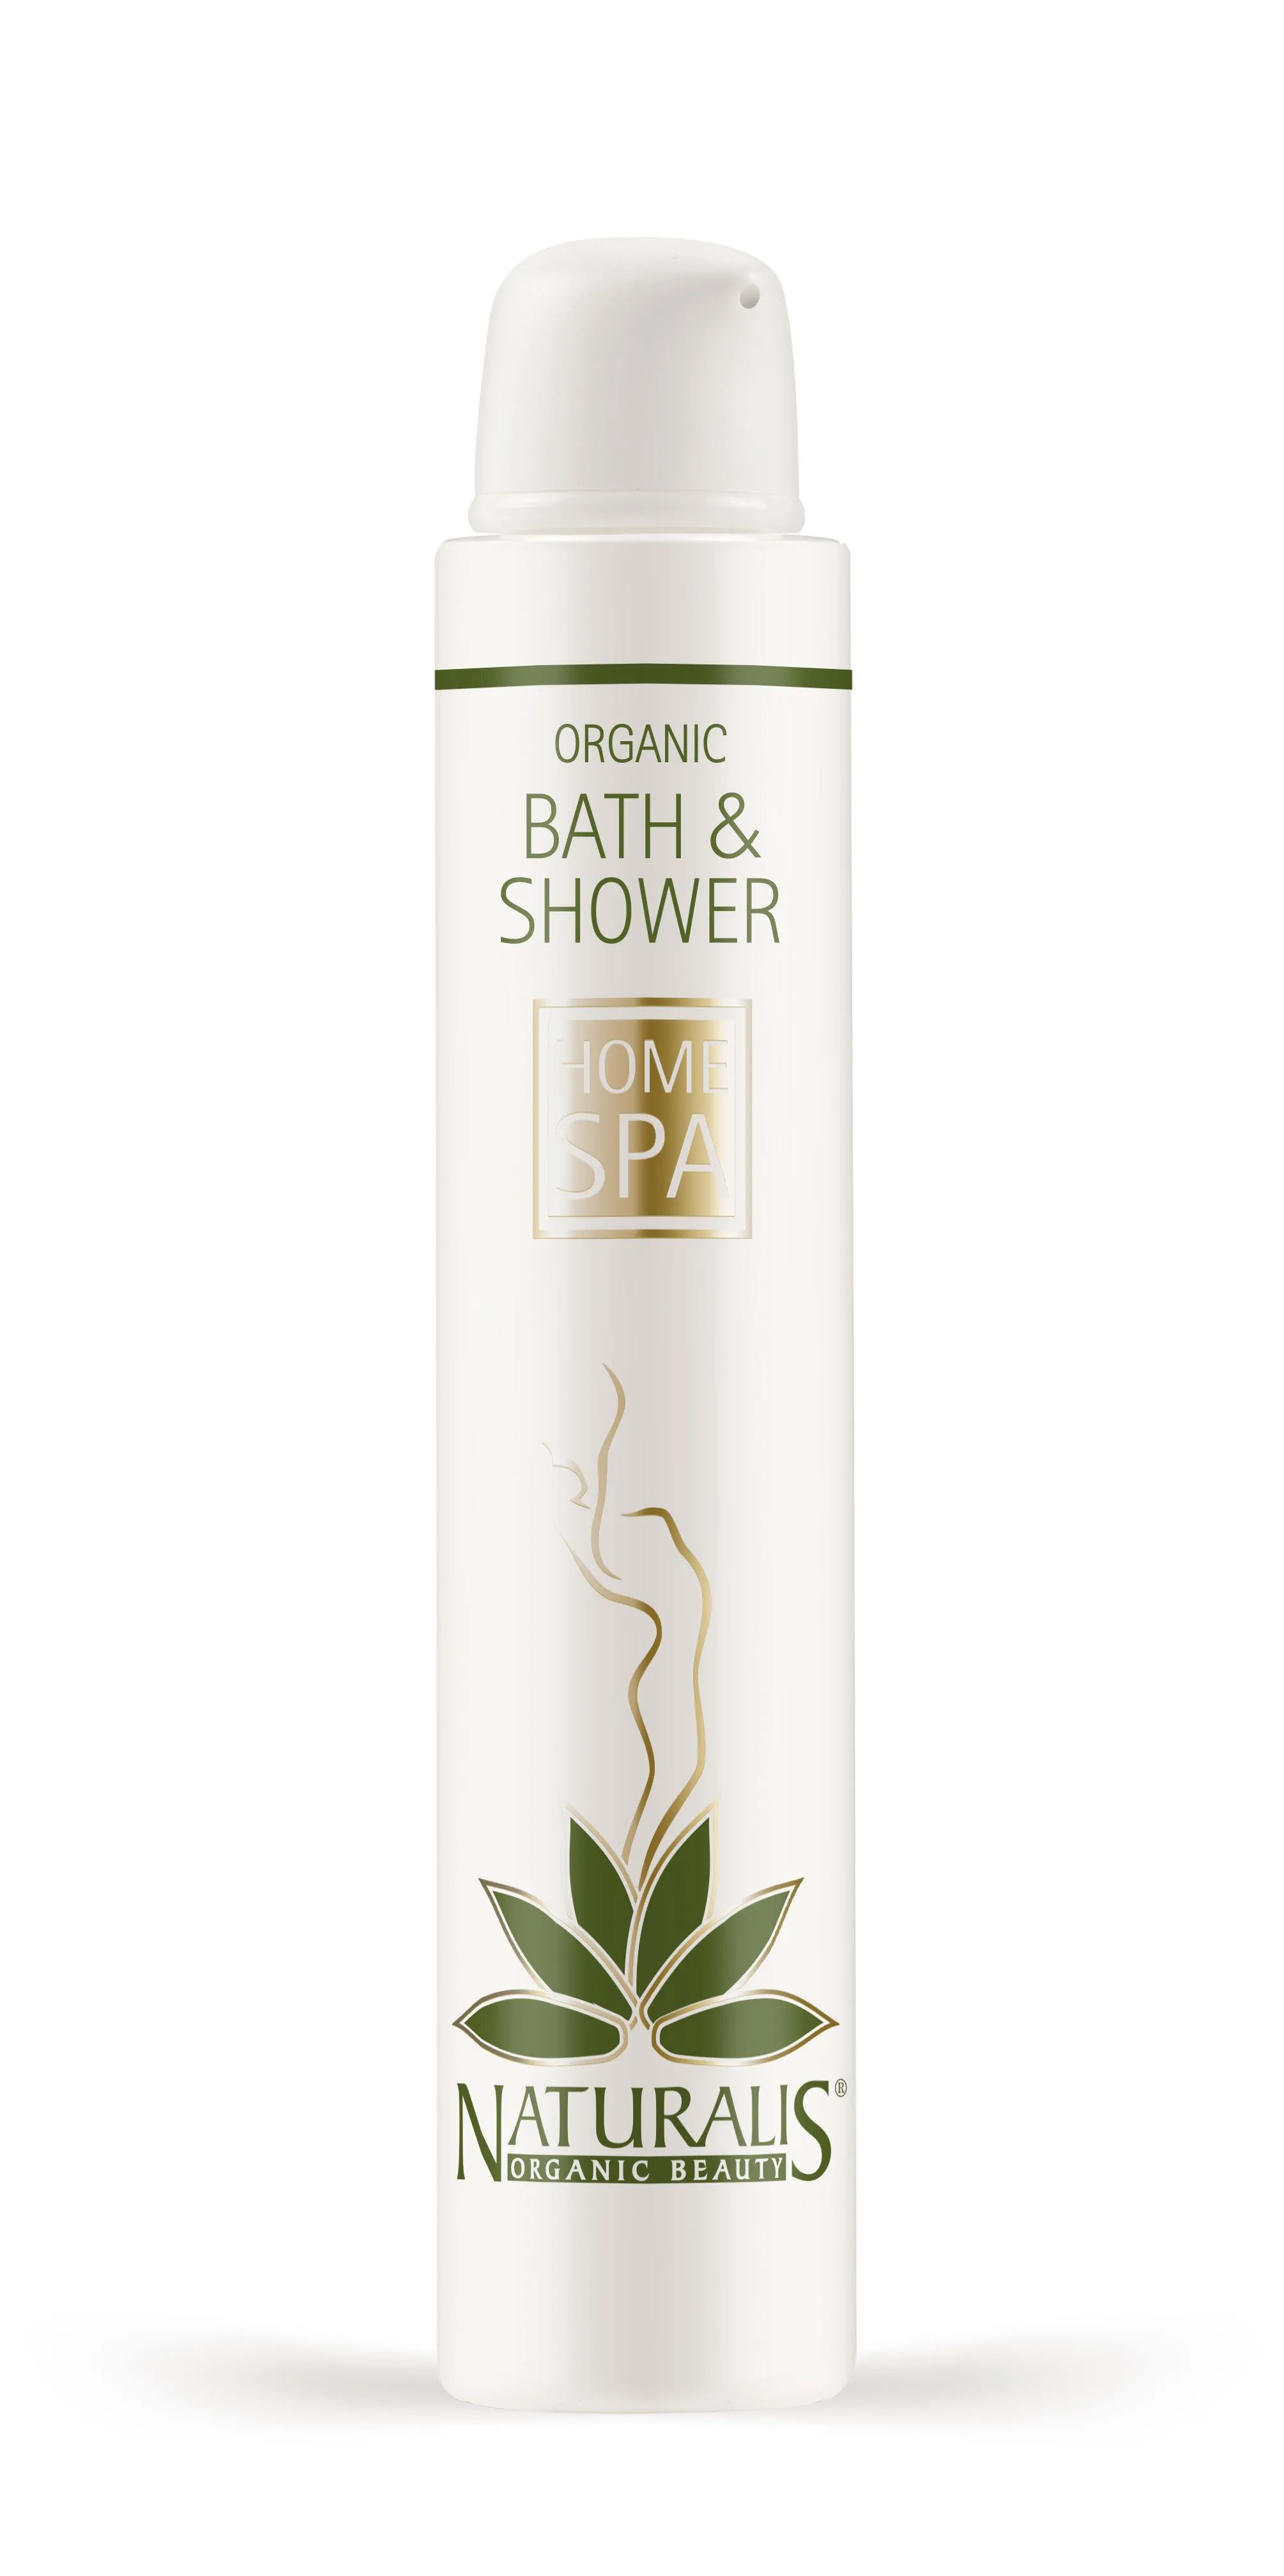 Naturalis Organic Home Spa gel do sprchy a koupele